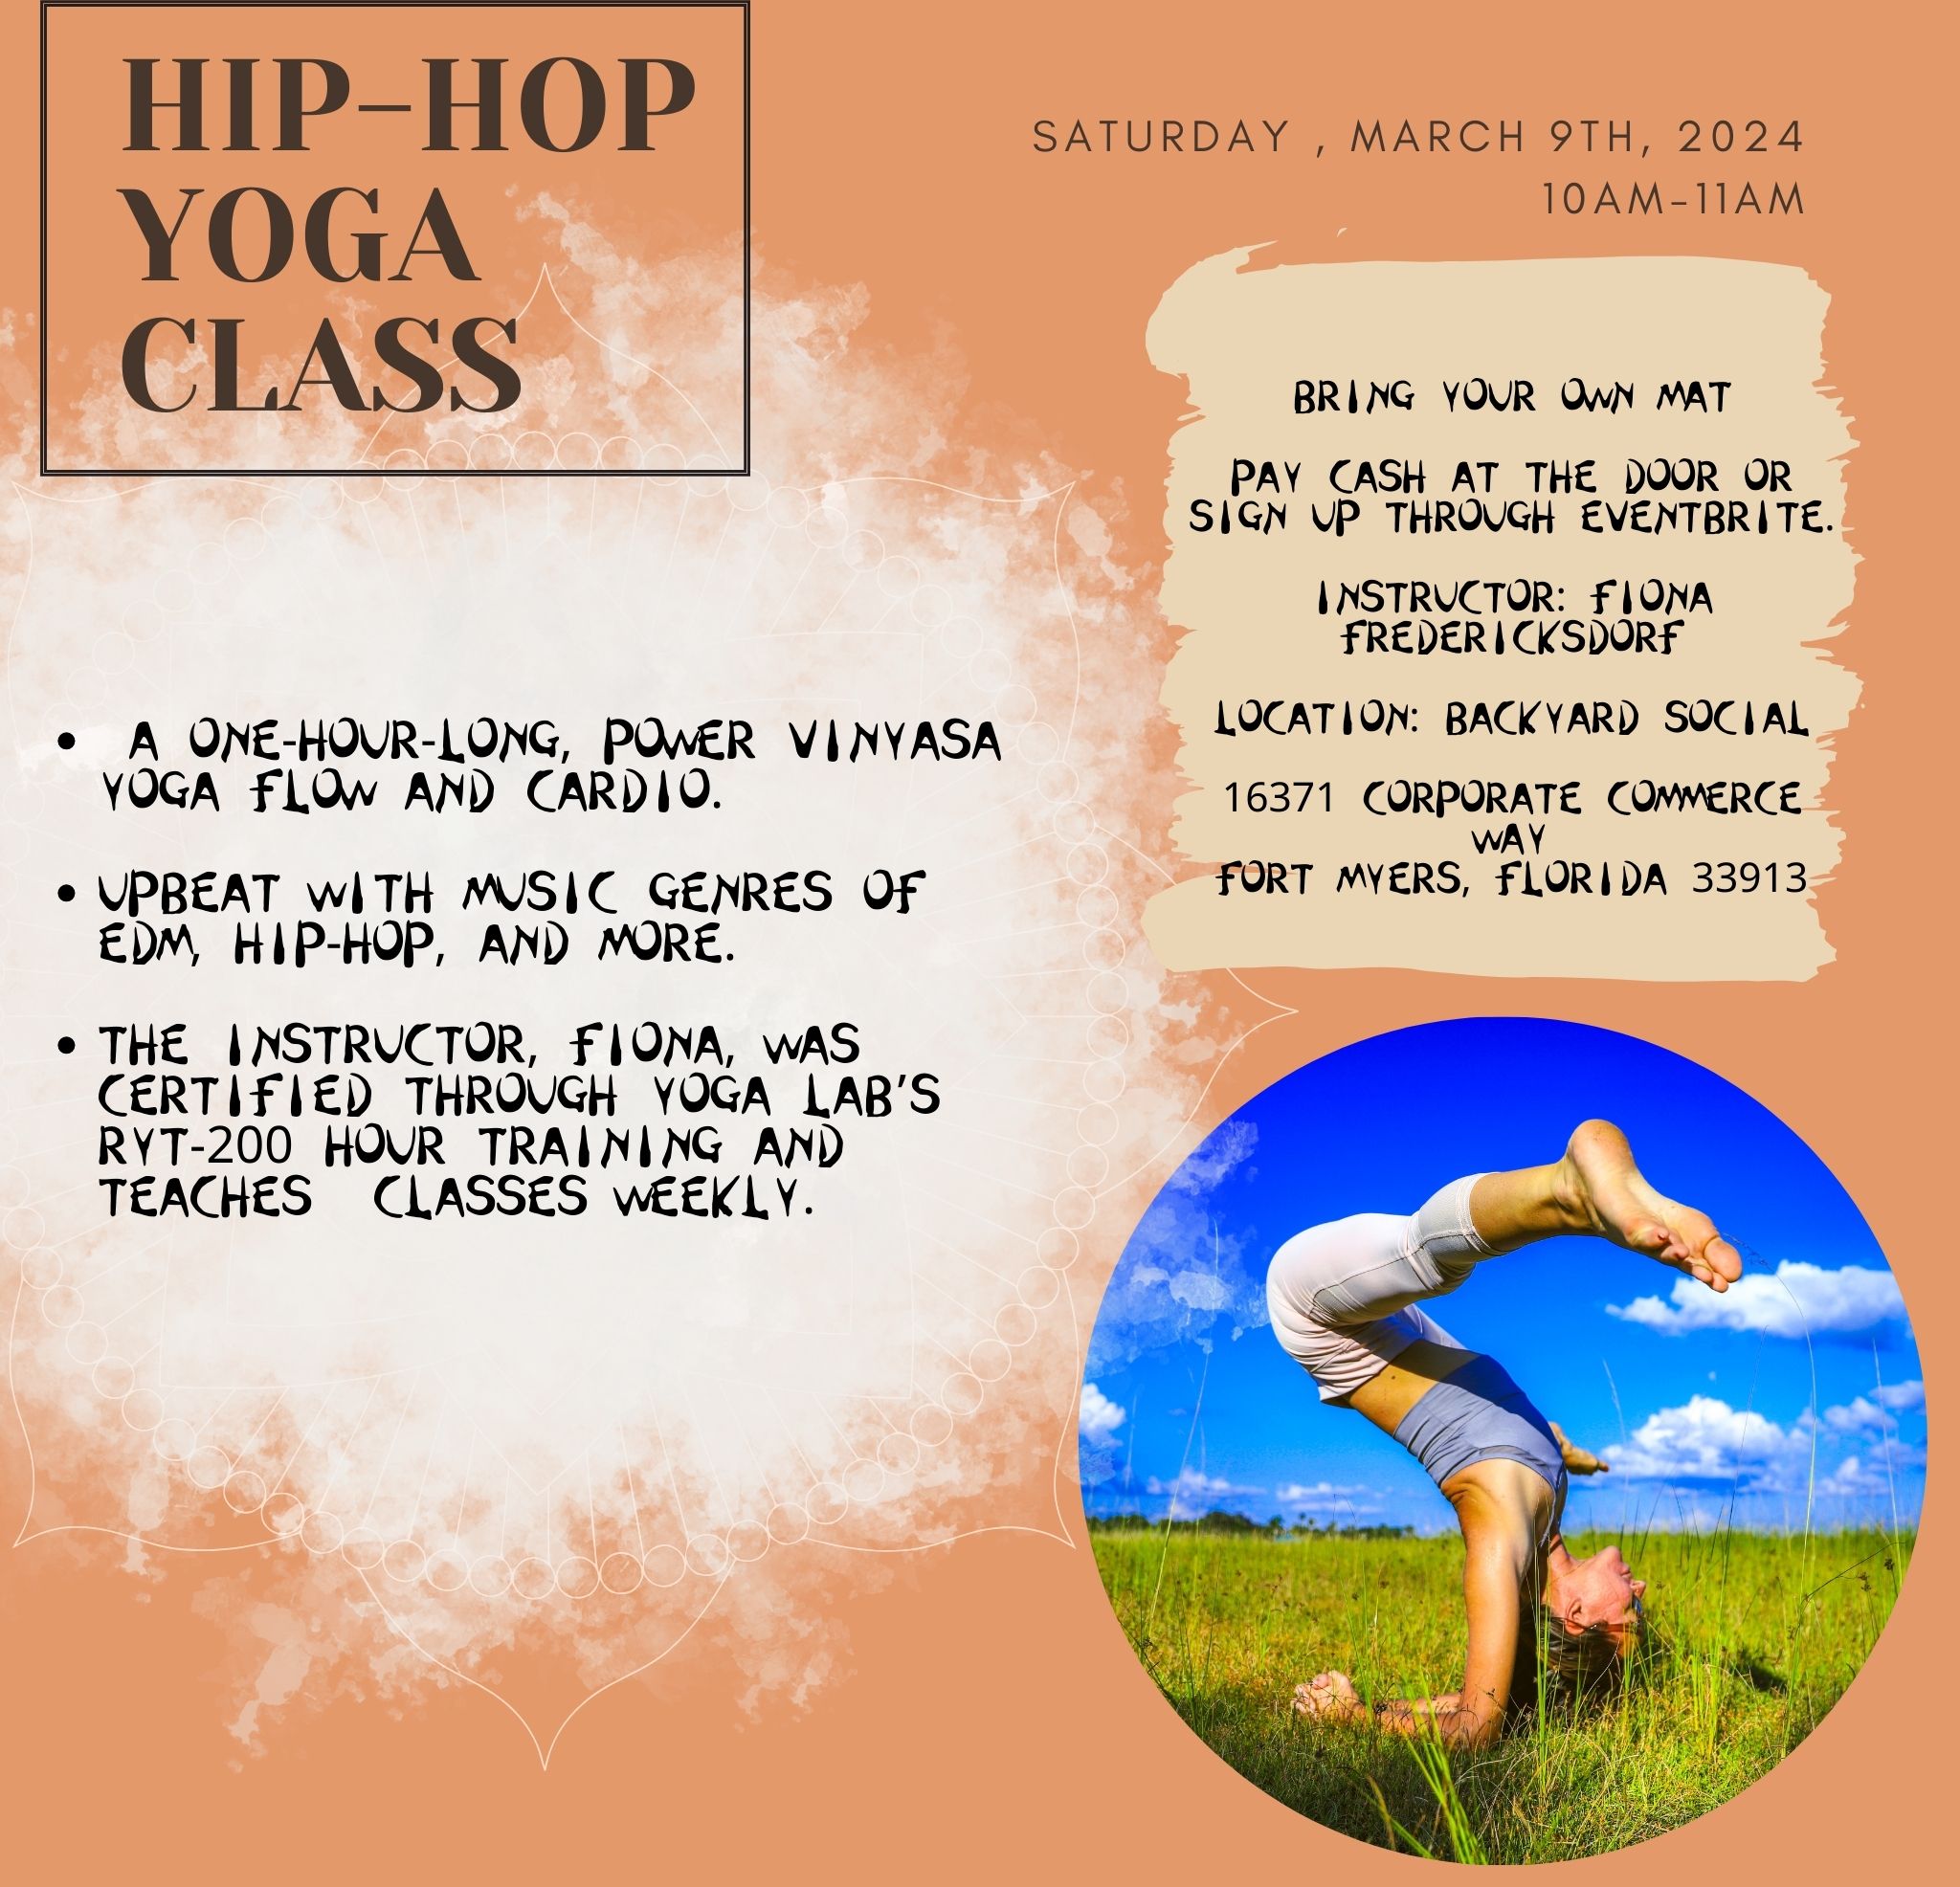 Hip-Hop Yoga class